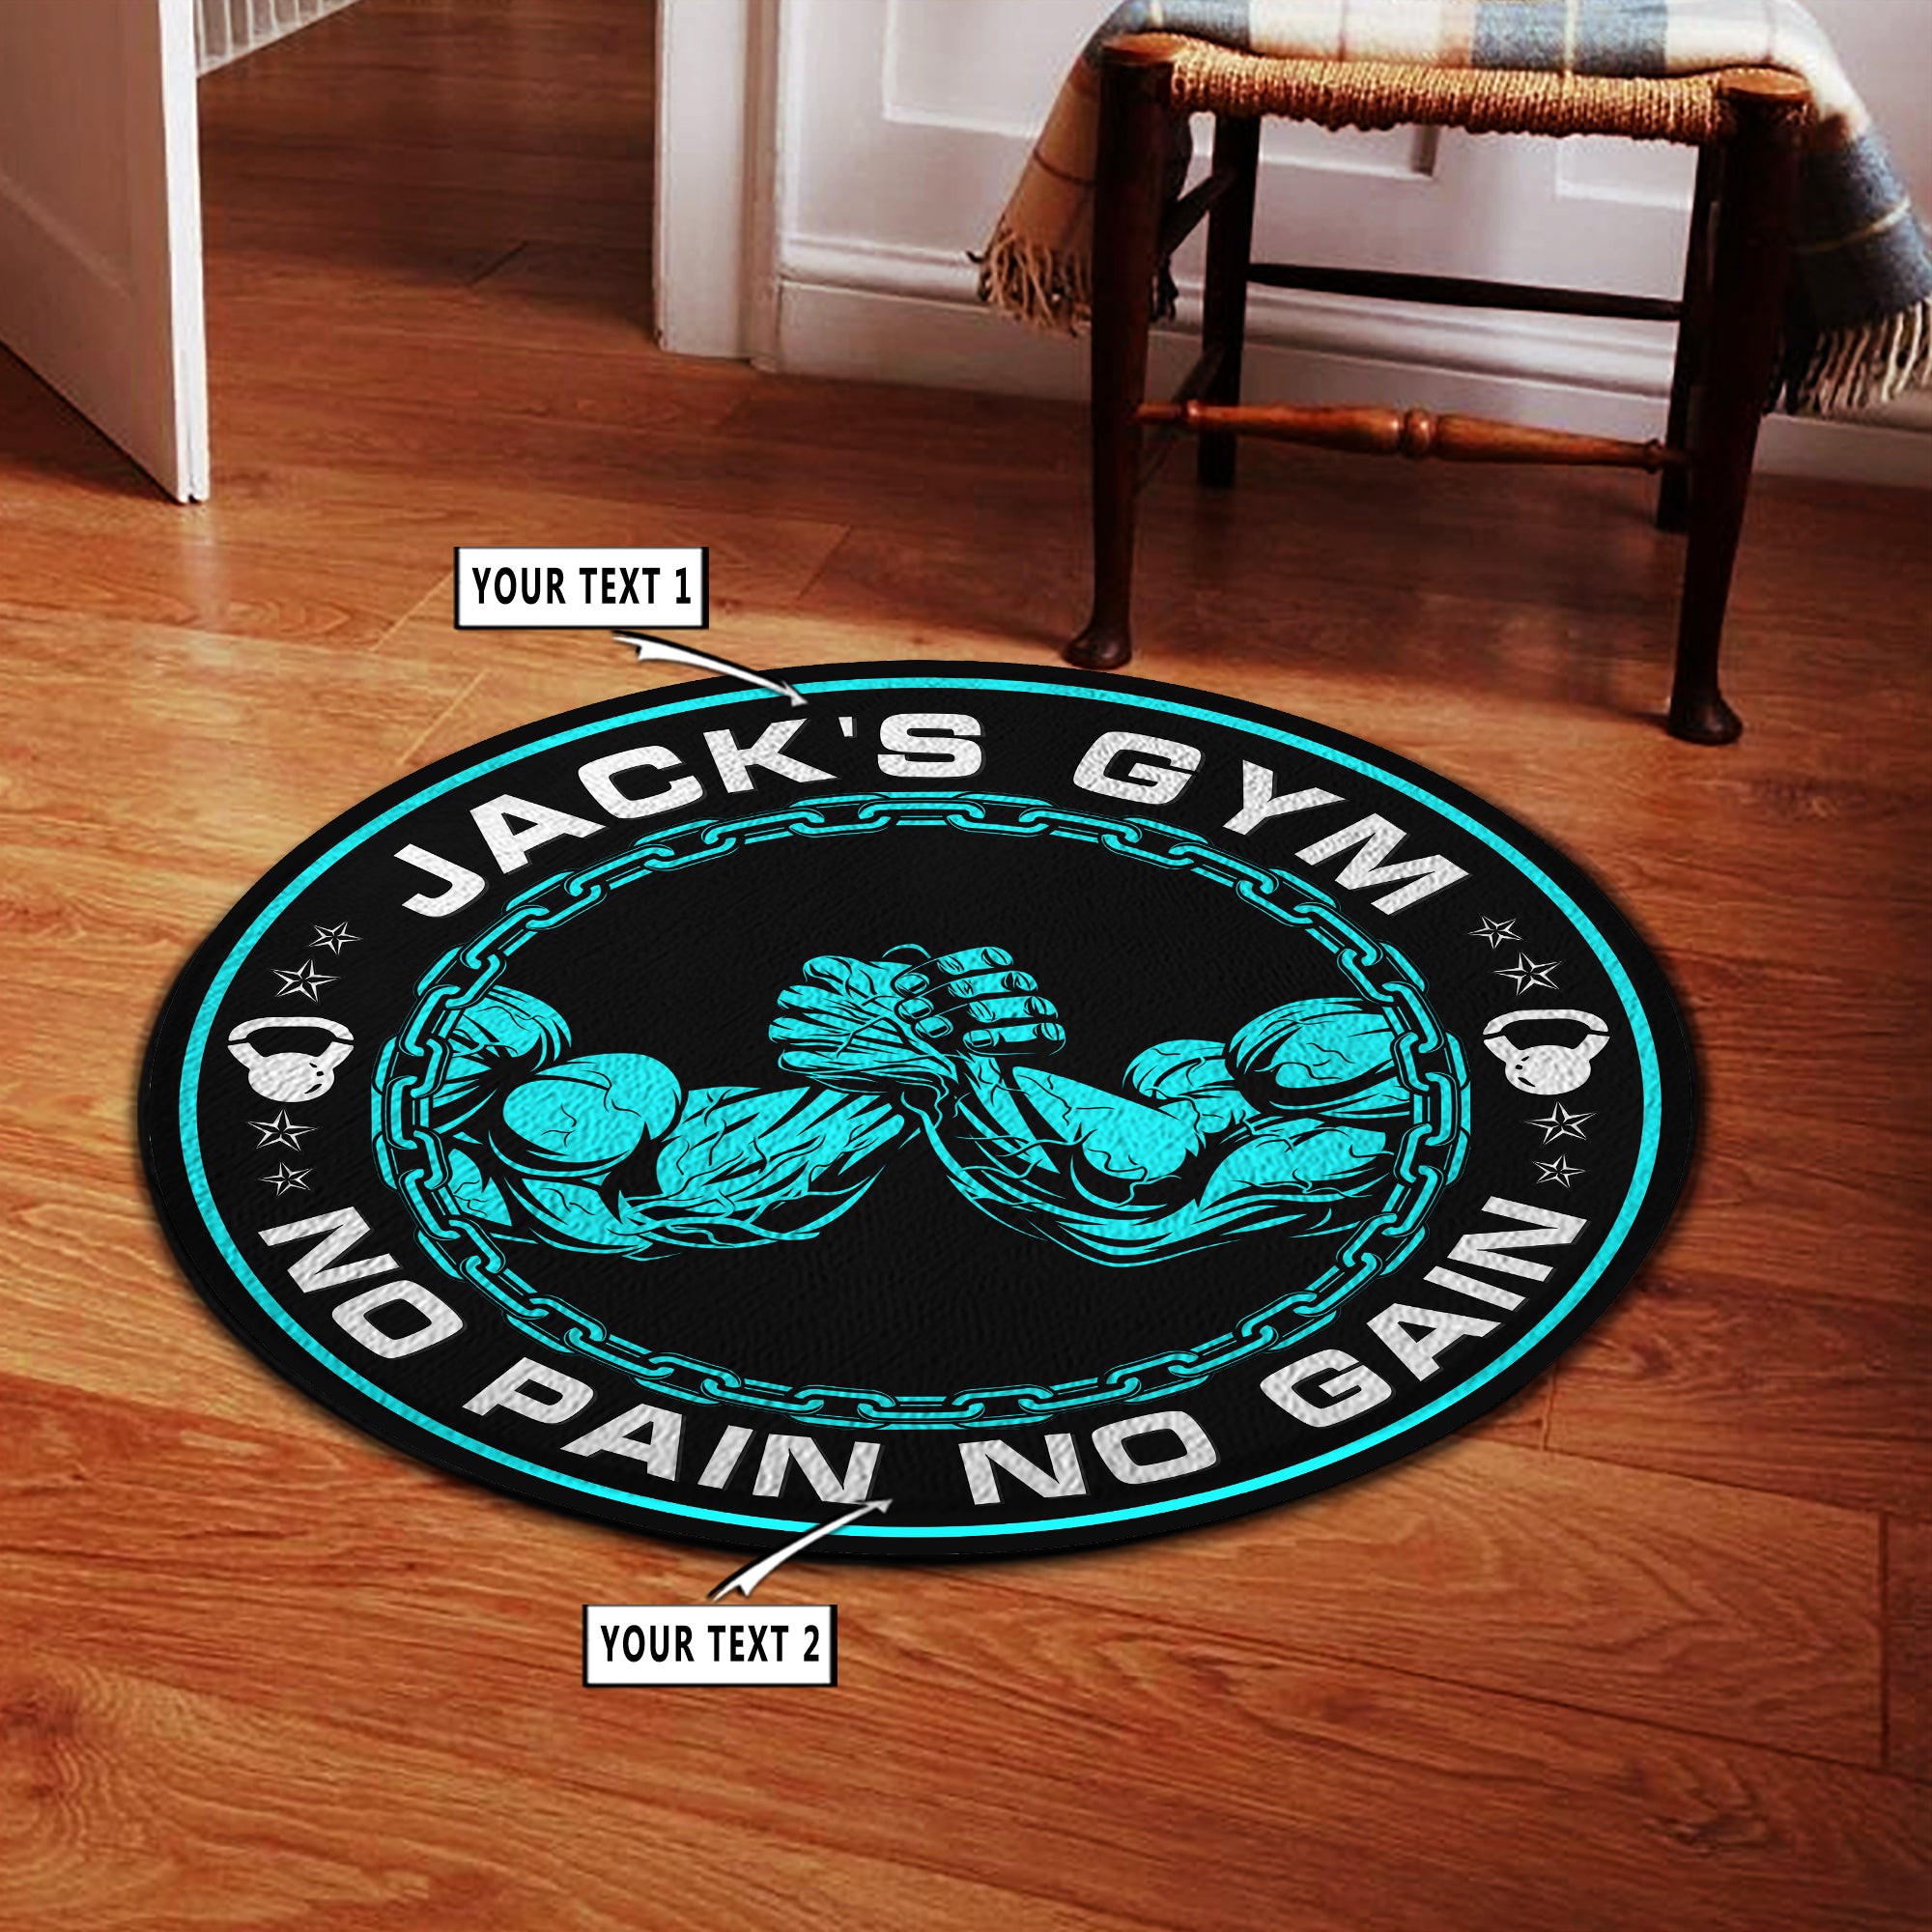 Personalized Home Gym Decor Motivational Quotes Round Rug, Carpet